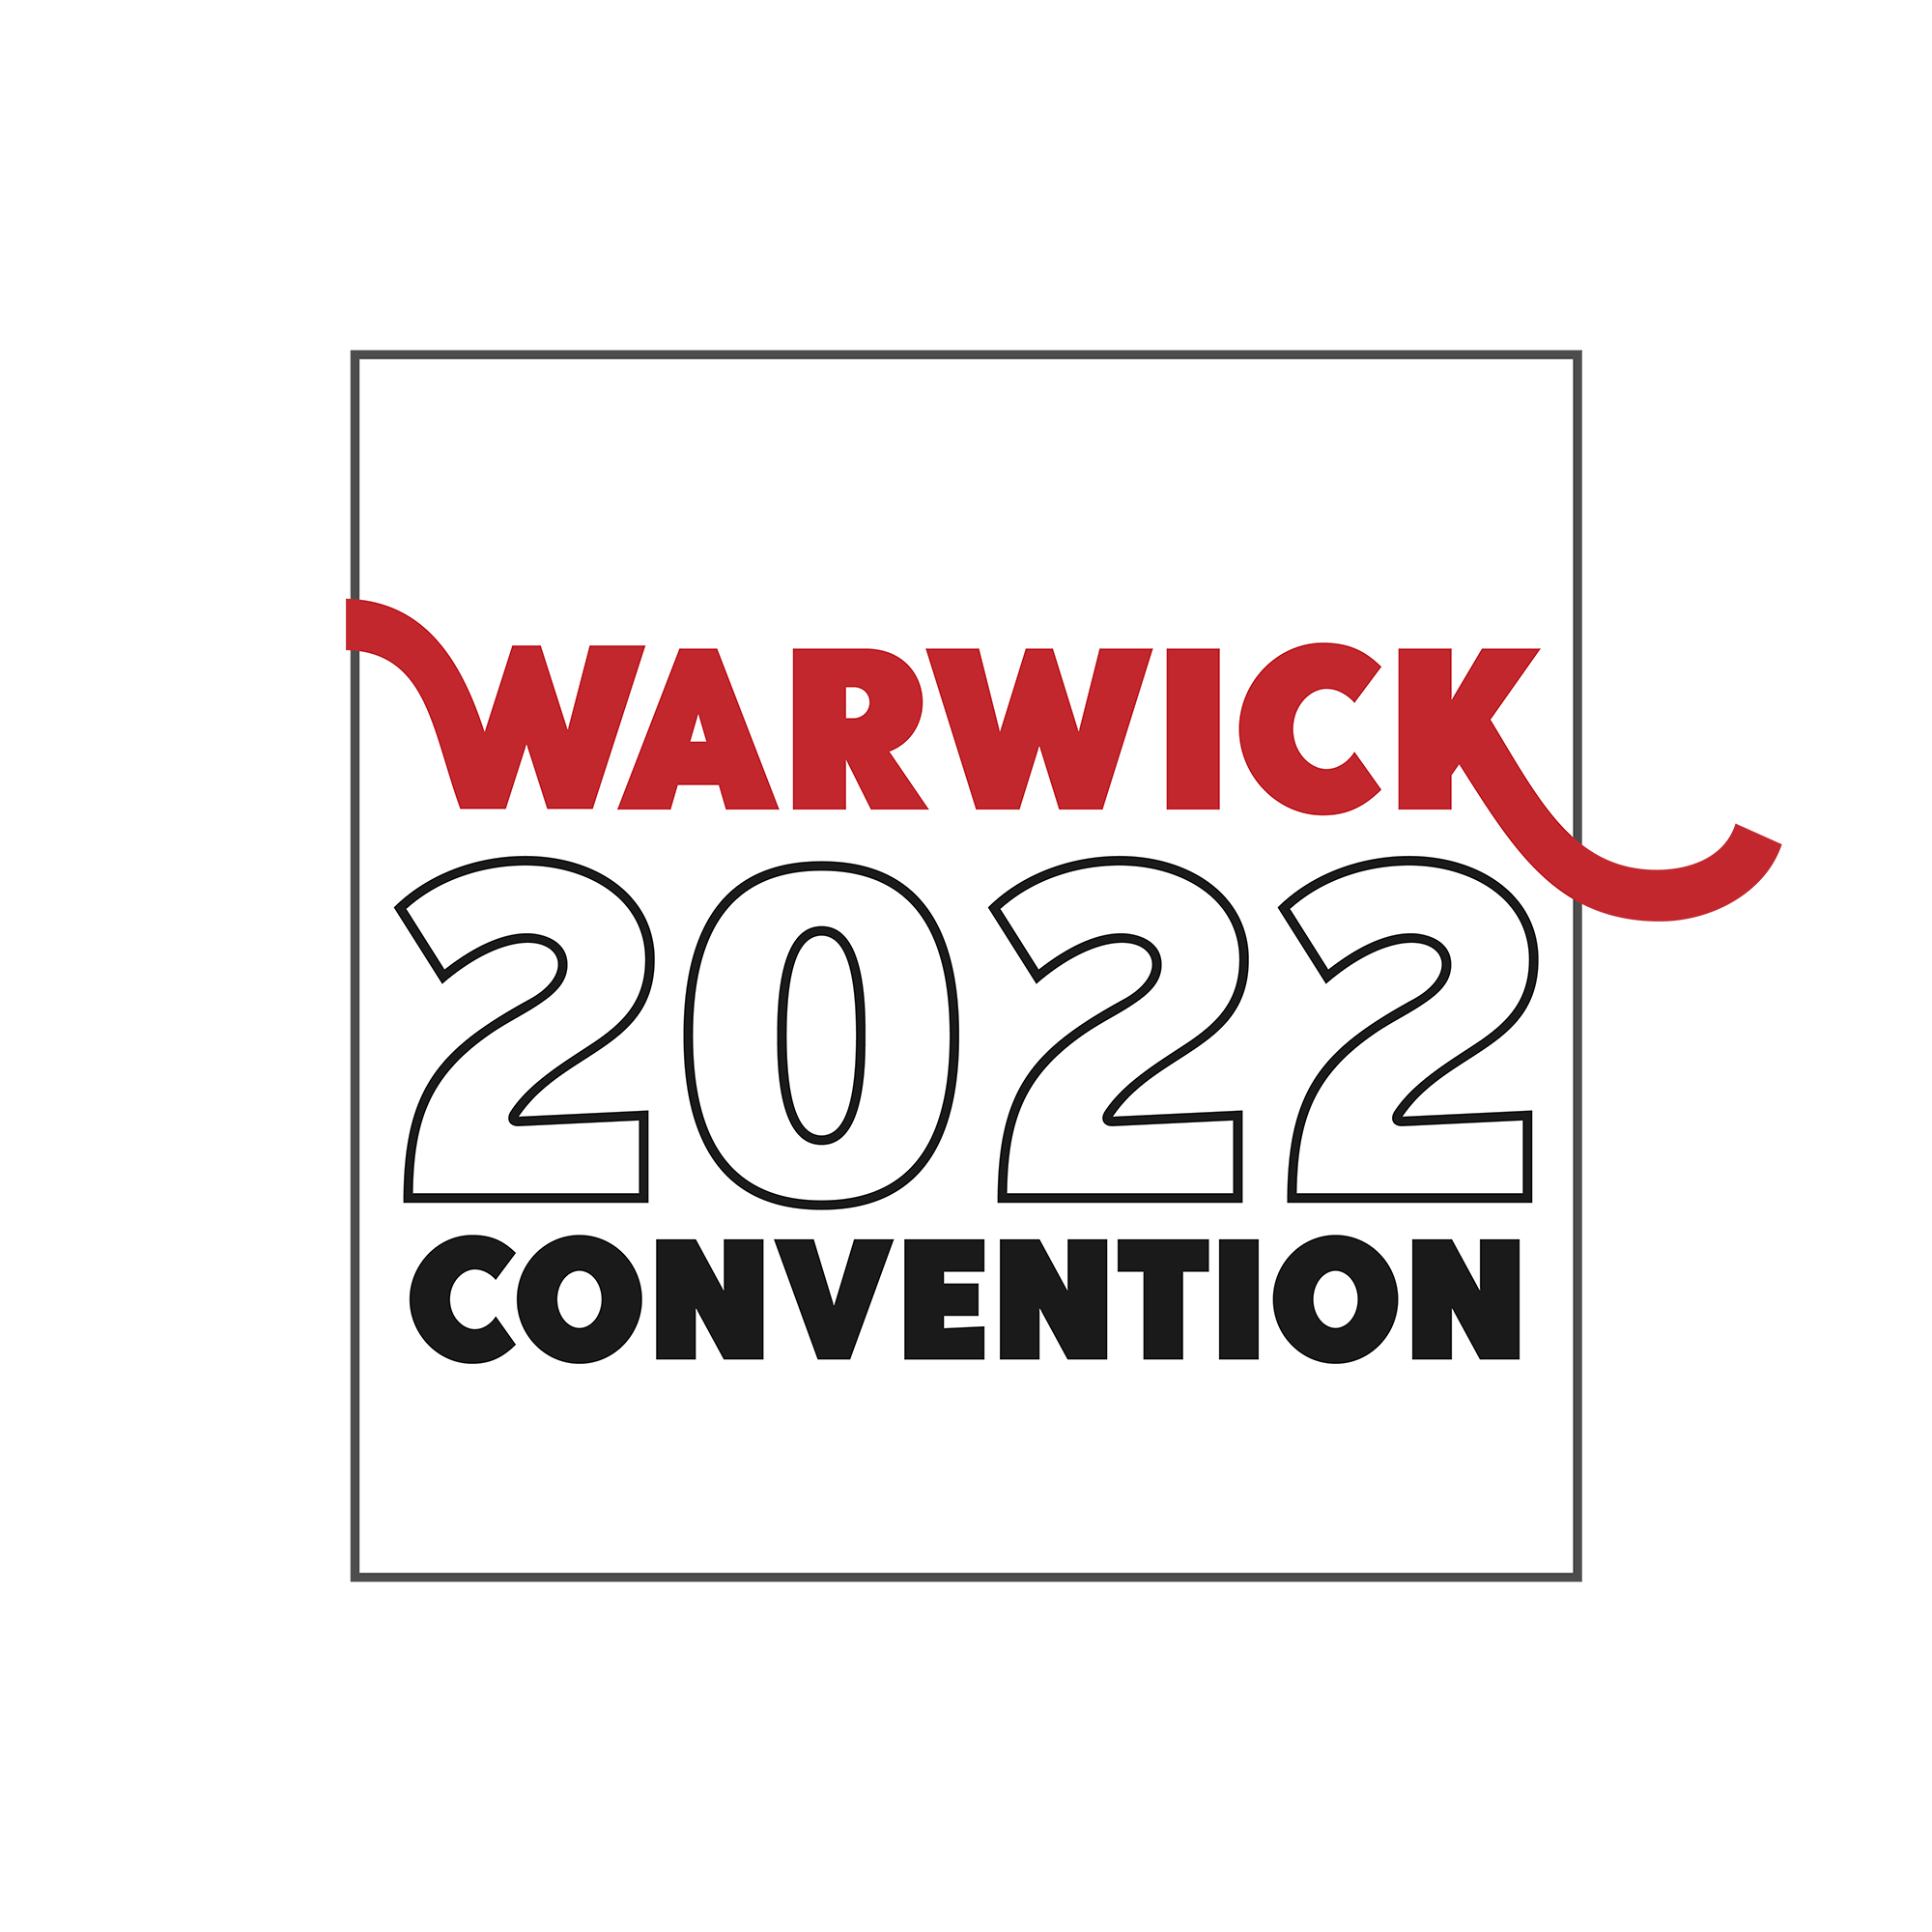 Warwick 2022 Convention